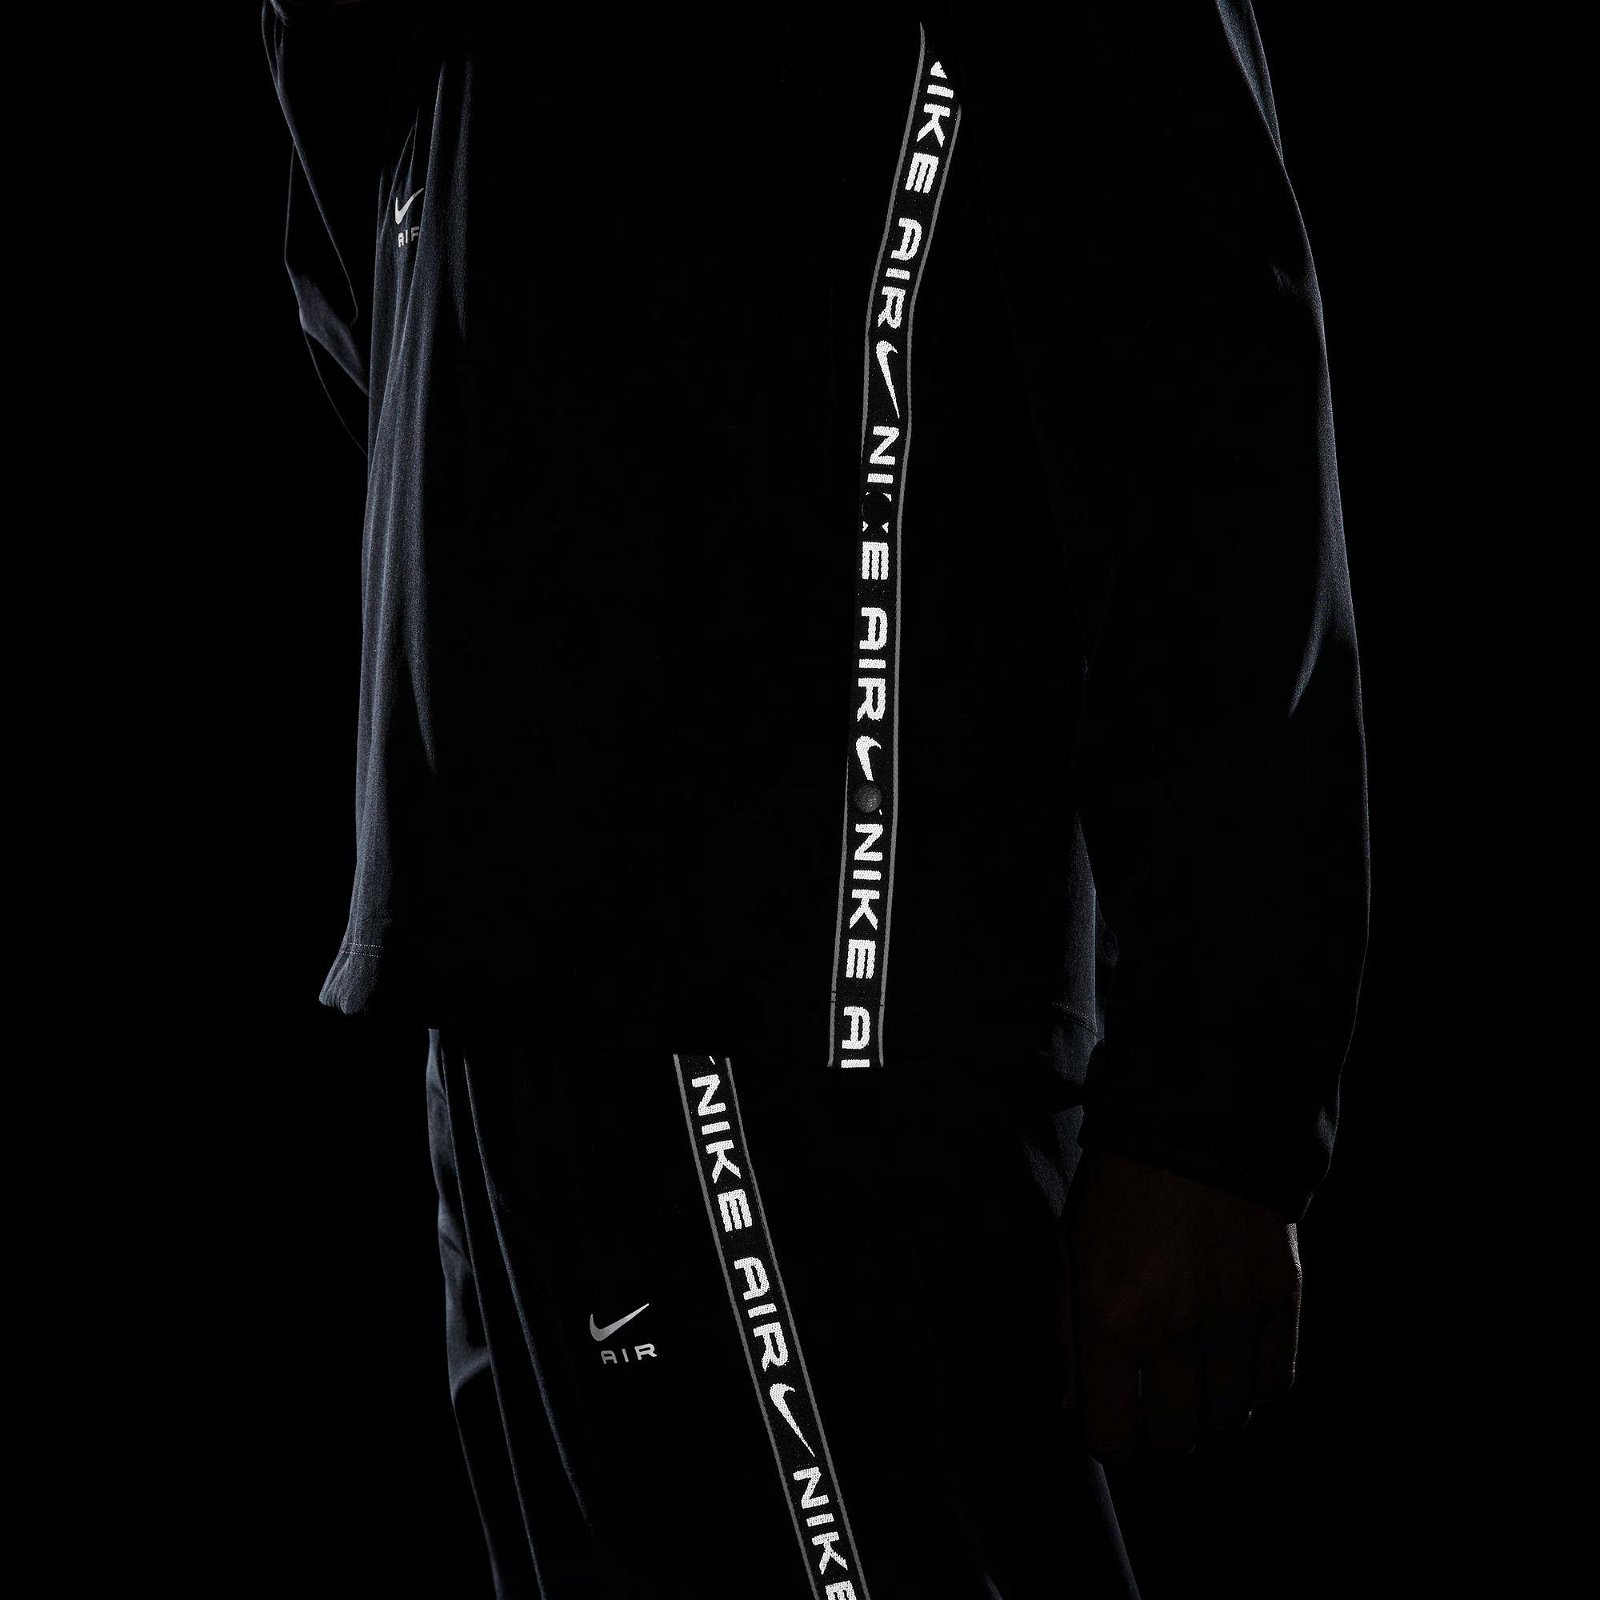 Nike Air Dri-FIT Kadın Siyah Ceket